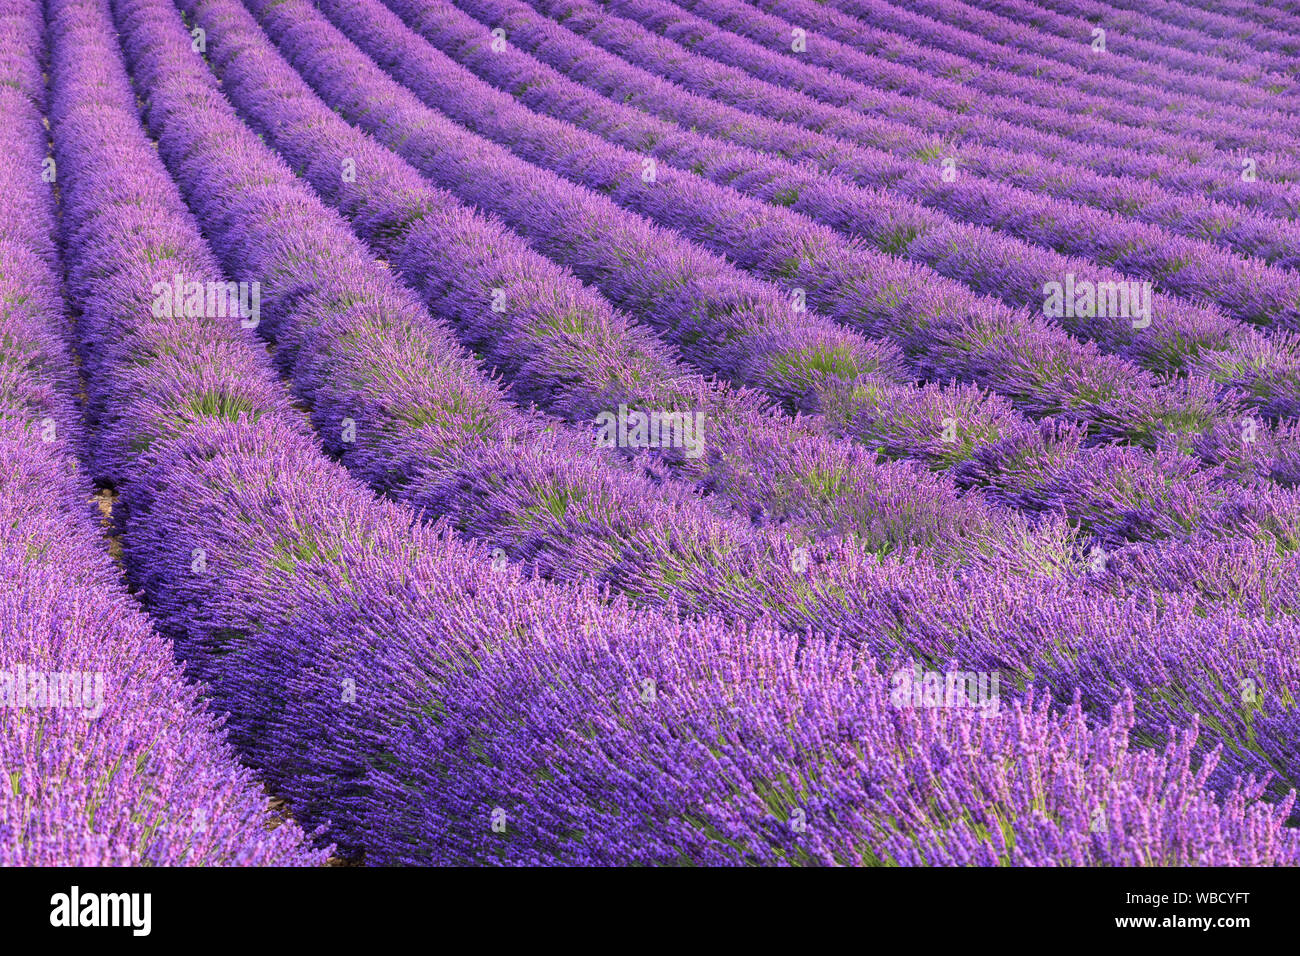 Lavendelfelder in der Nähe von Valensole, Alpes-de-Haute-Provence, Provence - Alpes - Côte d'Azur, Frankreich. Stockfoto